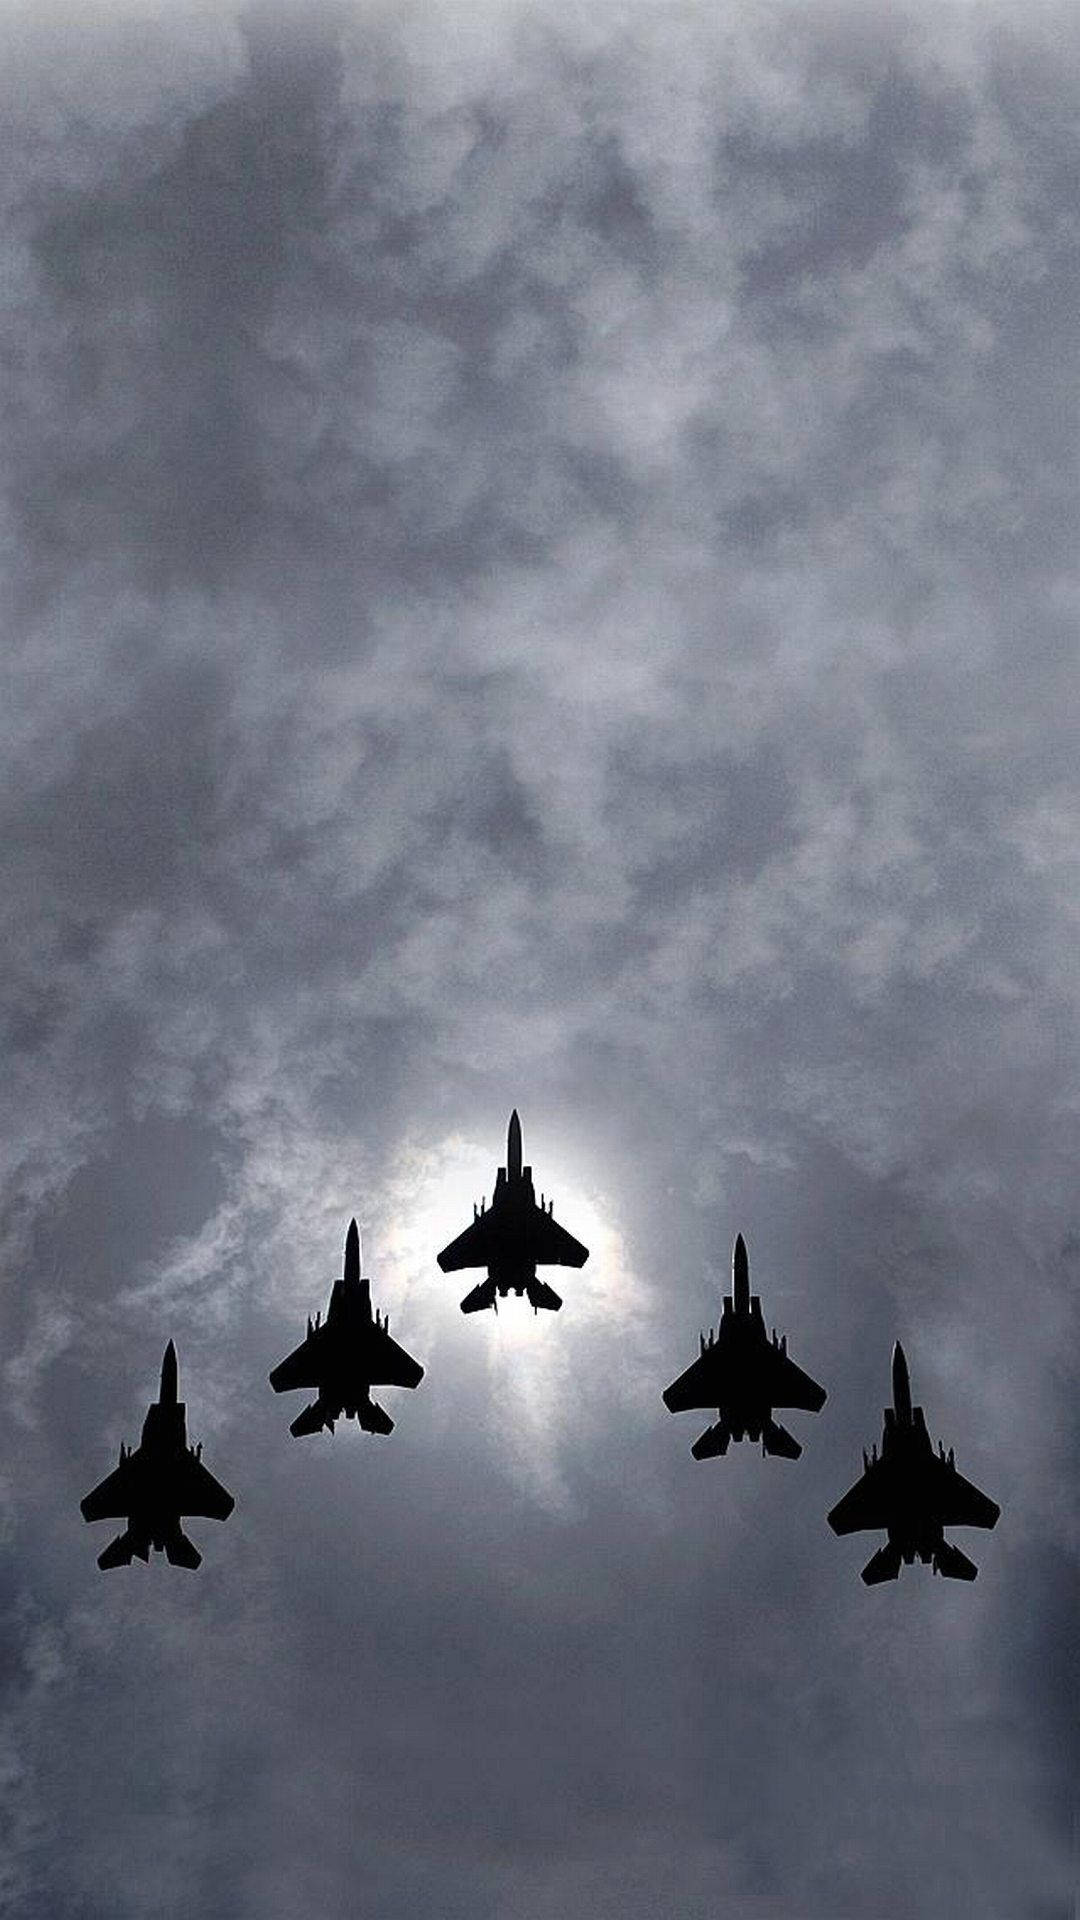 Shadows Of Fighter Jets Wallpaper